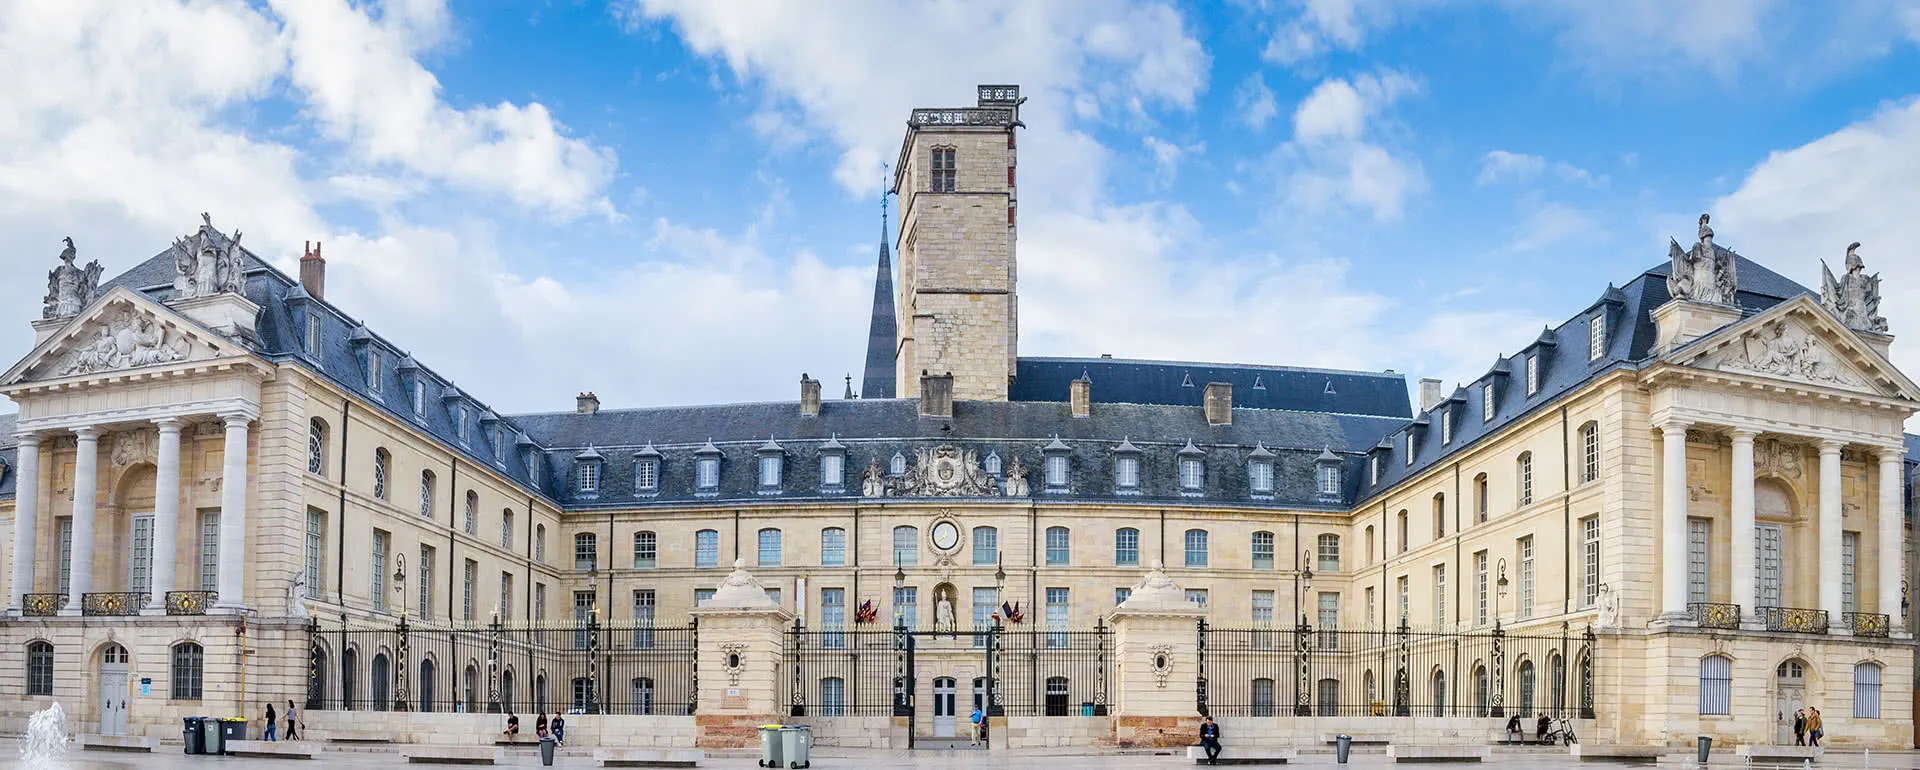 Dijon - the destination for company trips